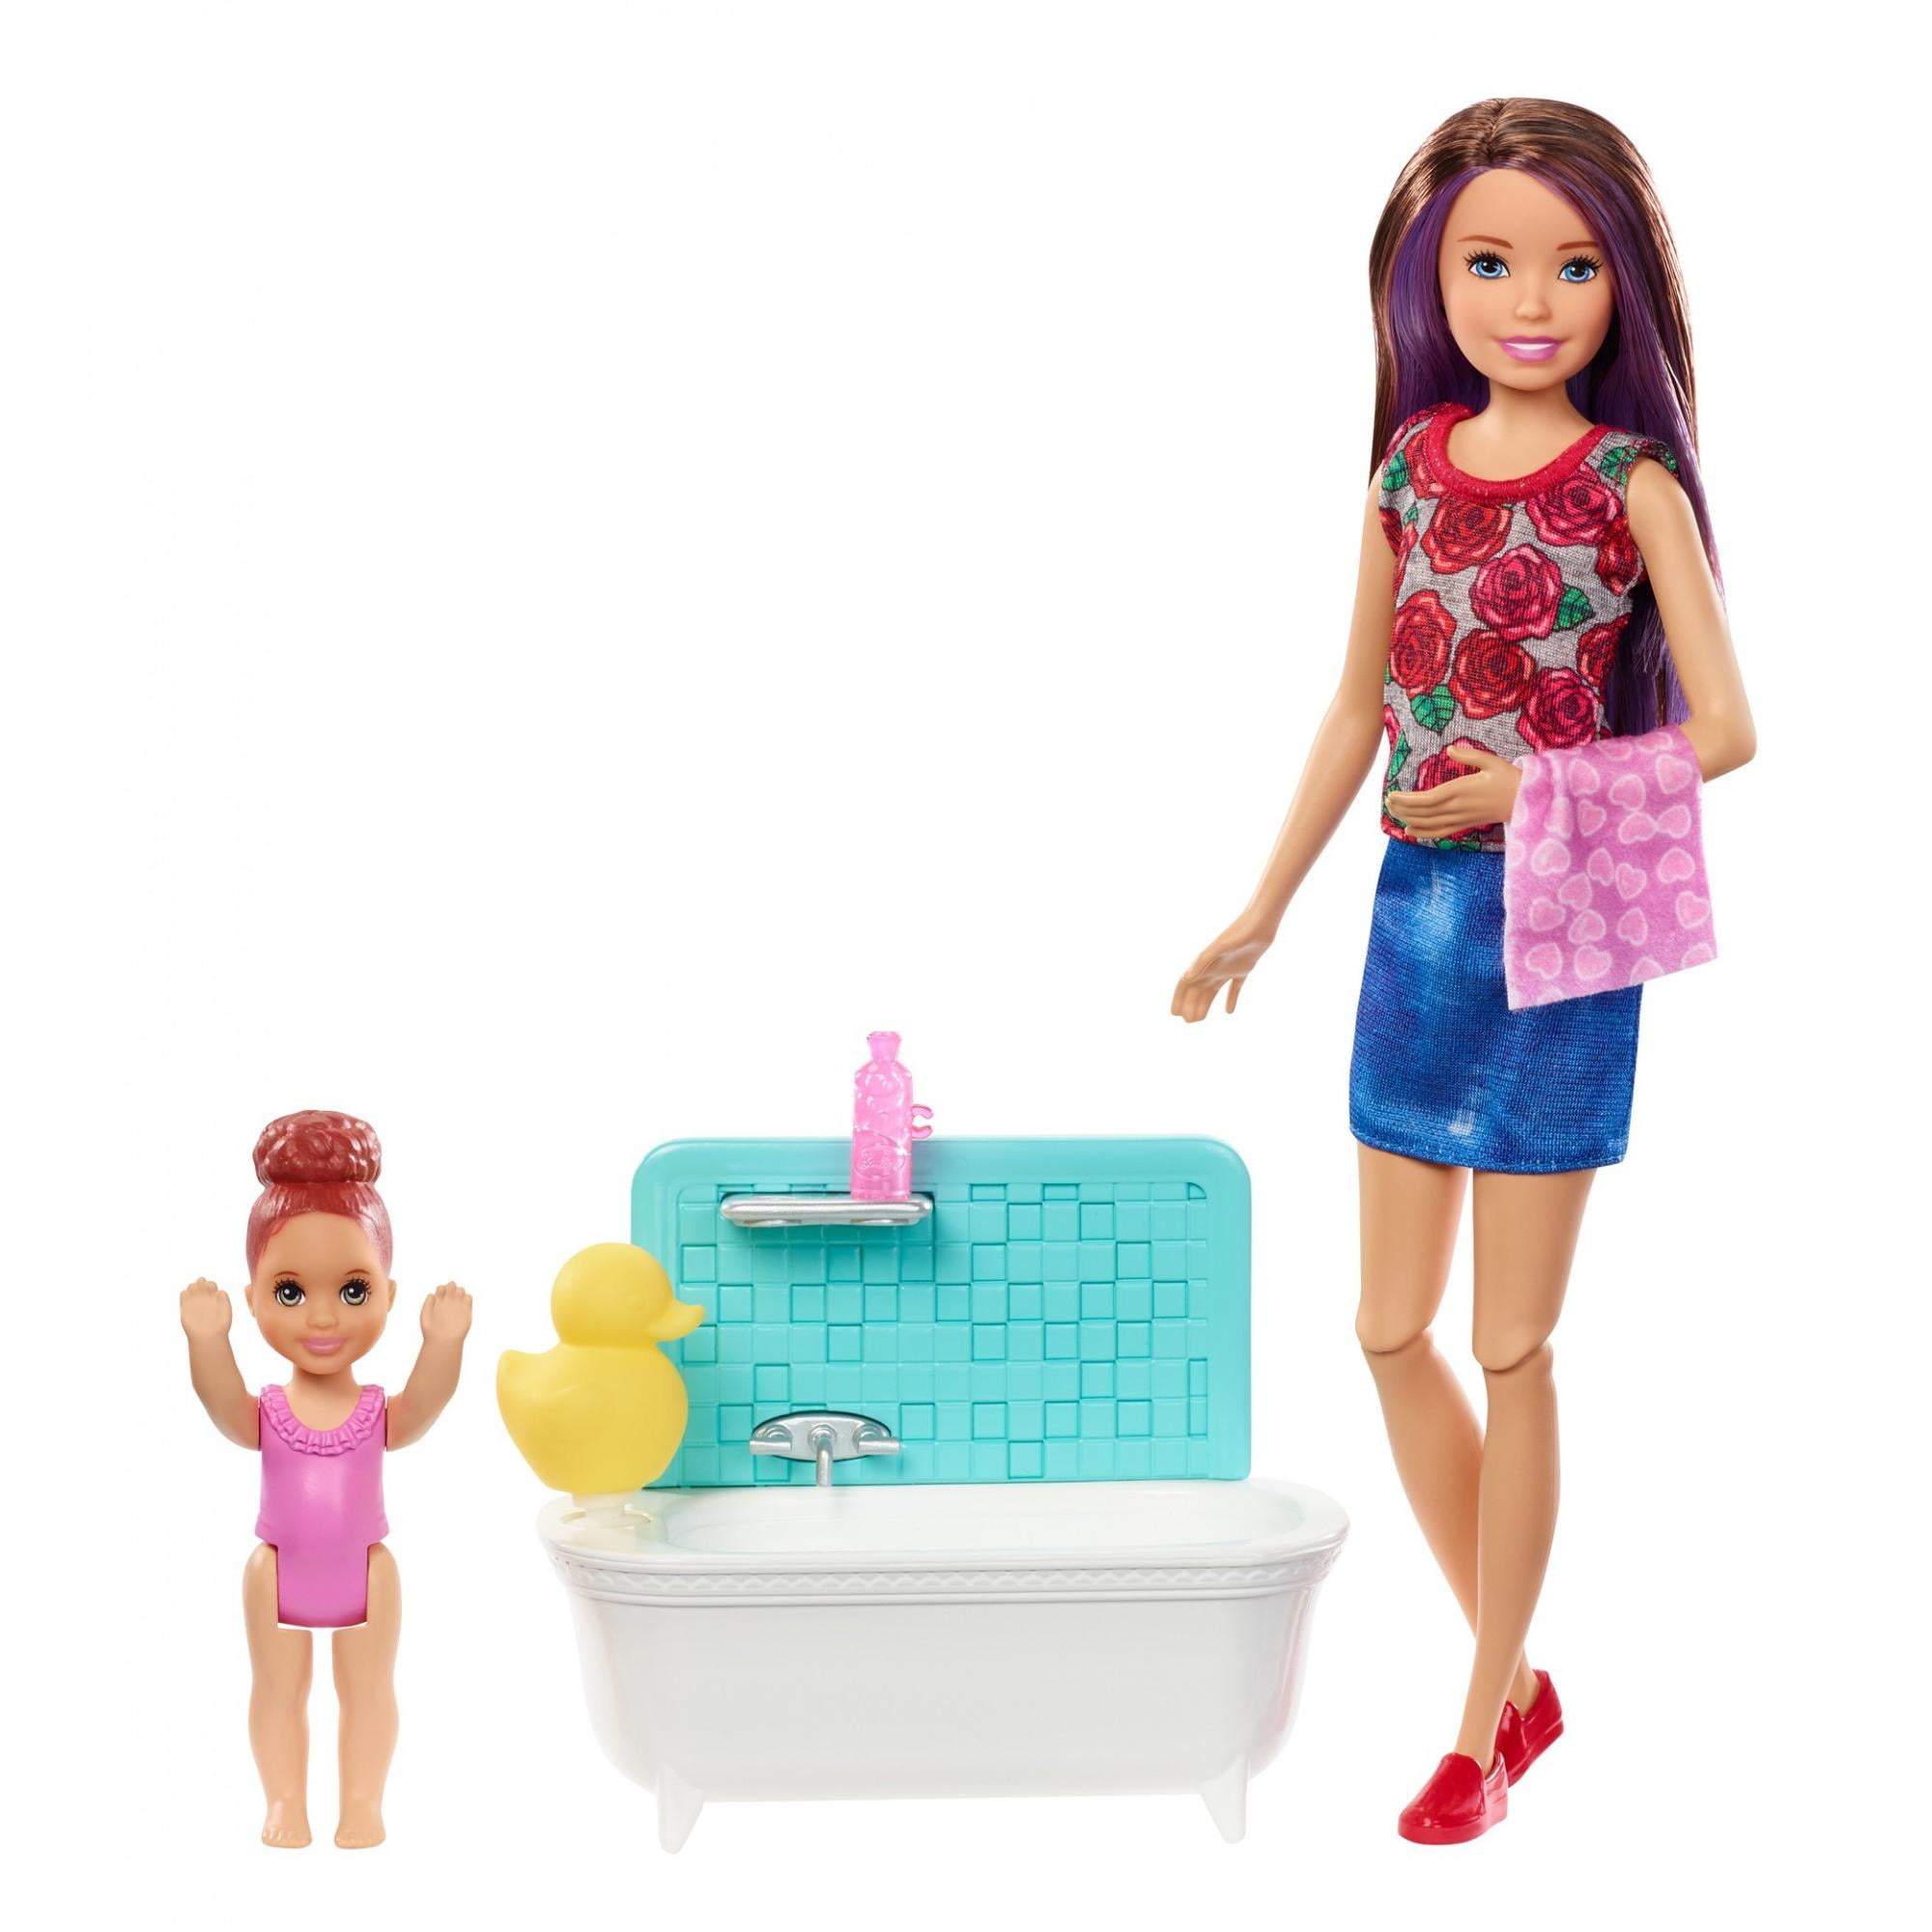 barbie skipper babysitter feeding playset